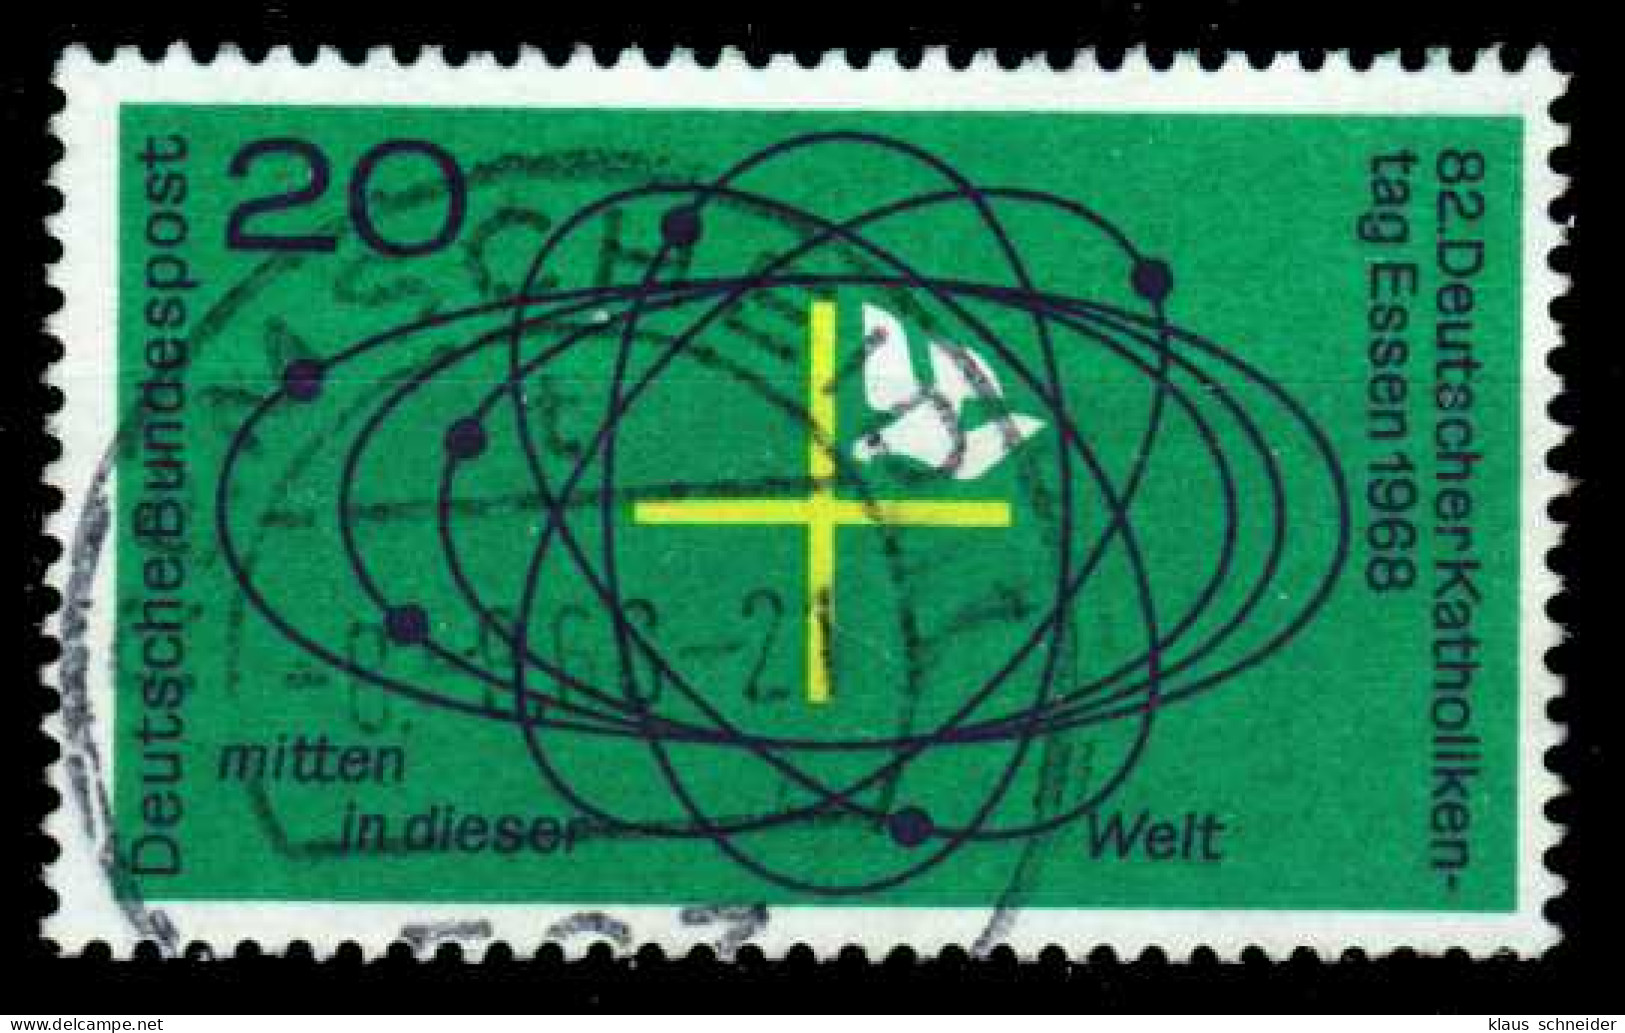 BRD 1968 Nr 568 Zentrisch Gestempelt X12985E - Used Stamps